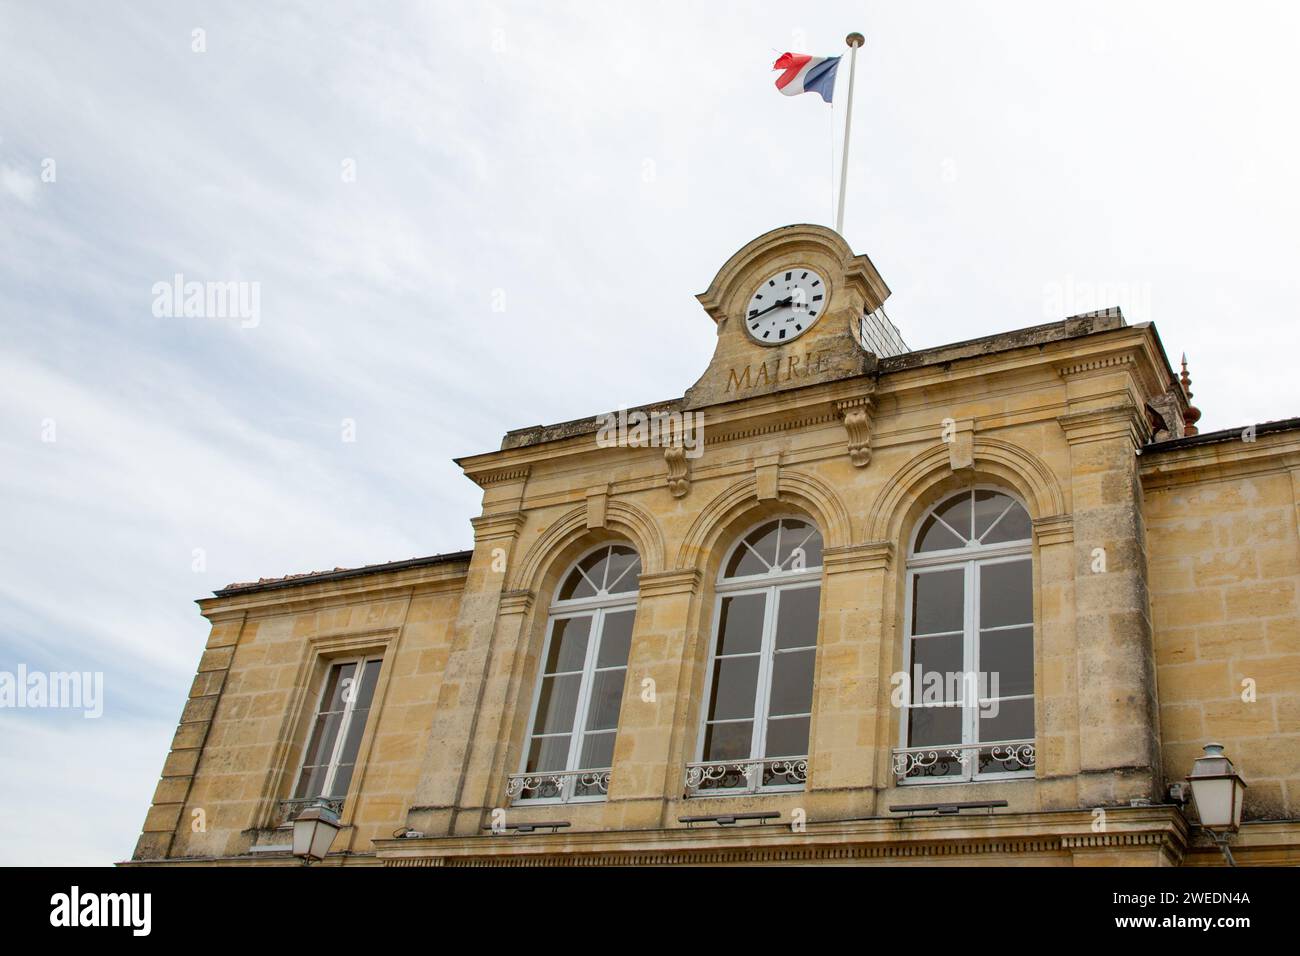 Saint-Caprais-de-Bordeaux city hall wall clock facade an clock sign french text mairie means town hall Stock Photo